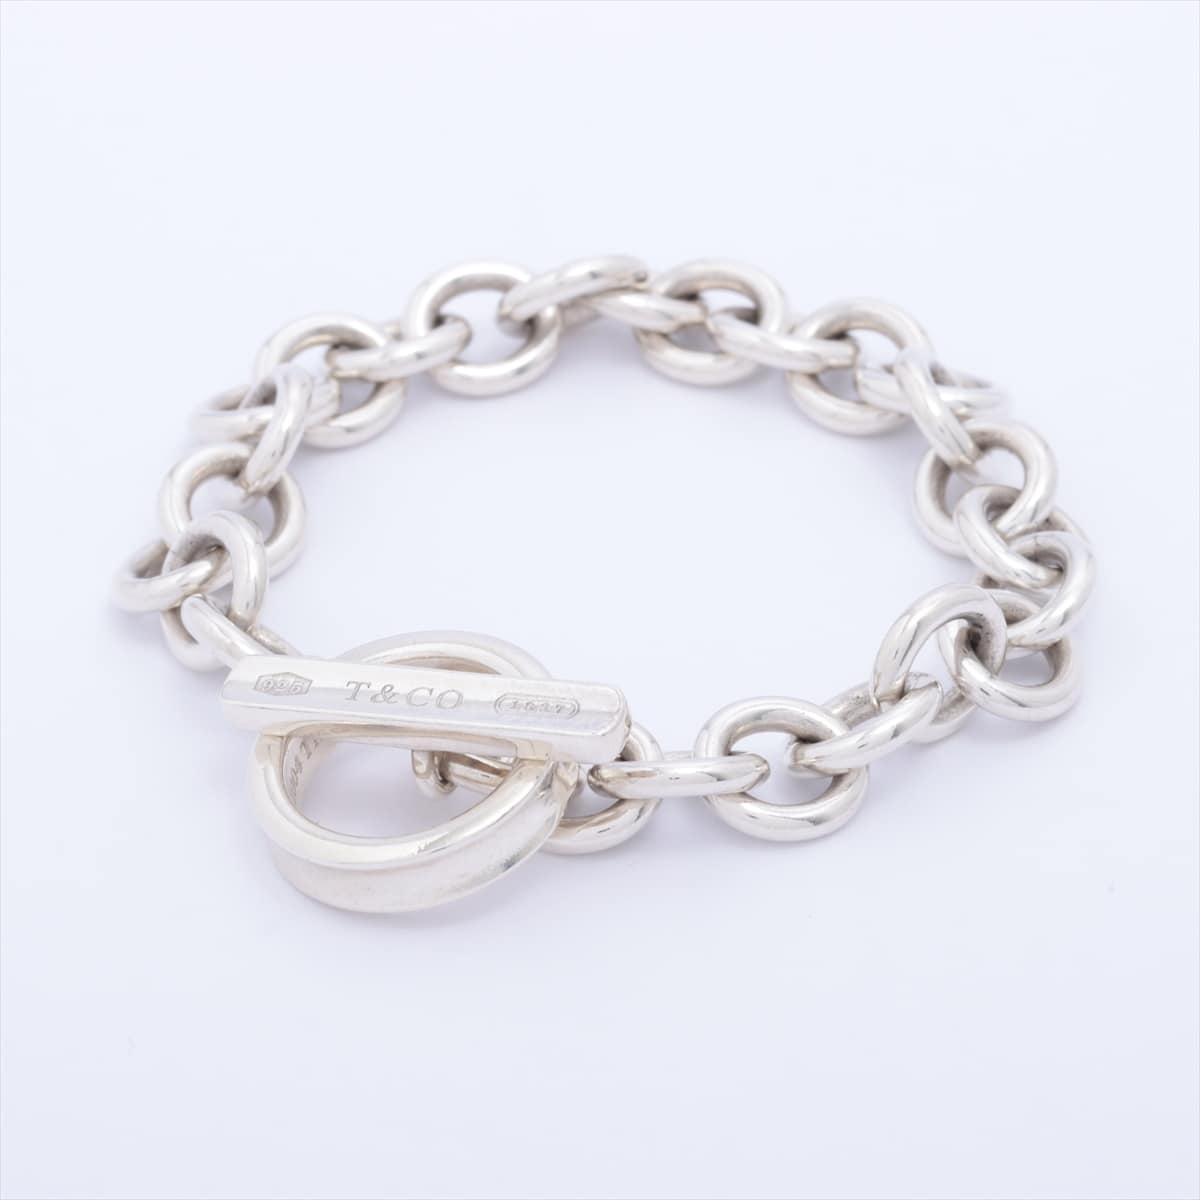 Tiffany 1837 Round Link Toggle Bracelet 925 36.5g Silver